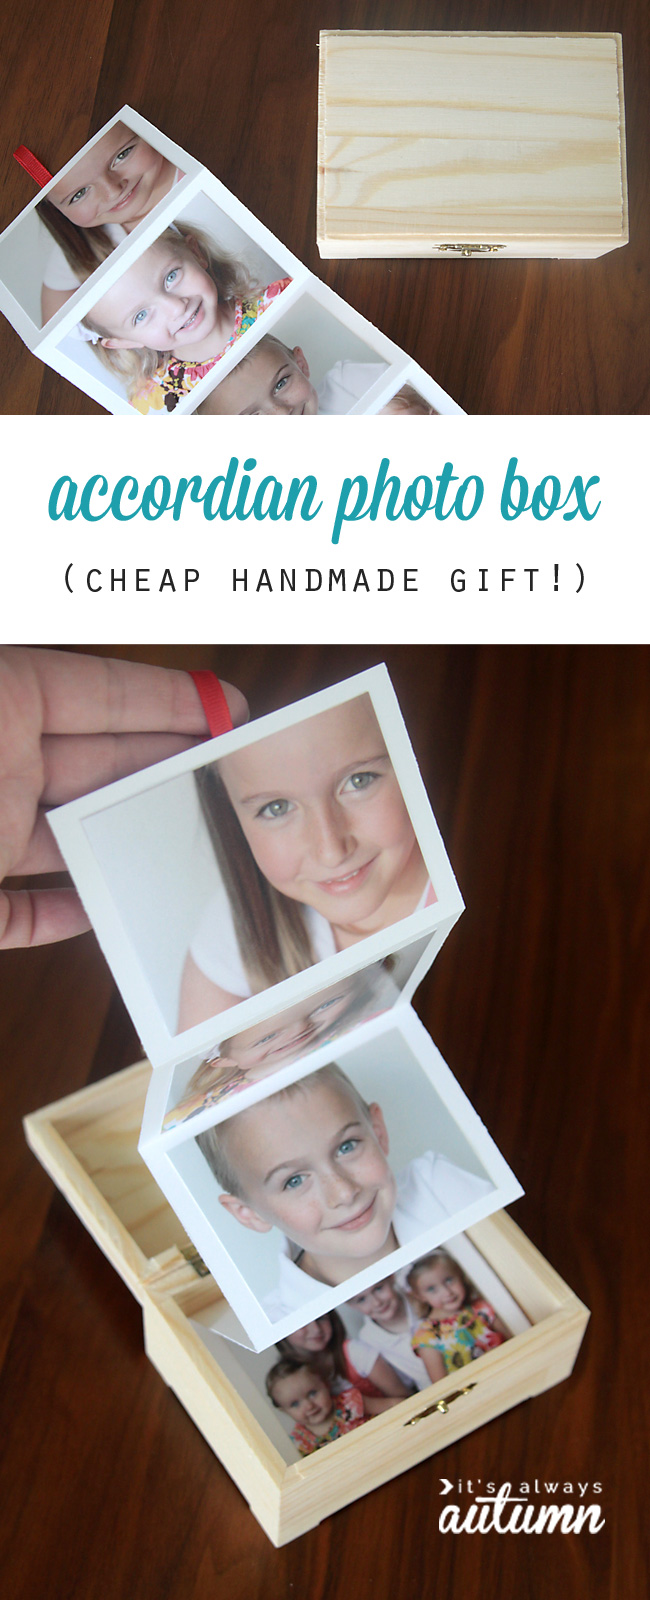 DIY accordian photo box gift